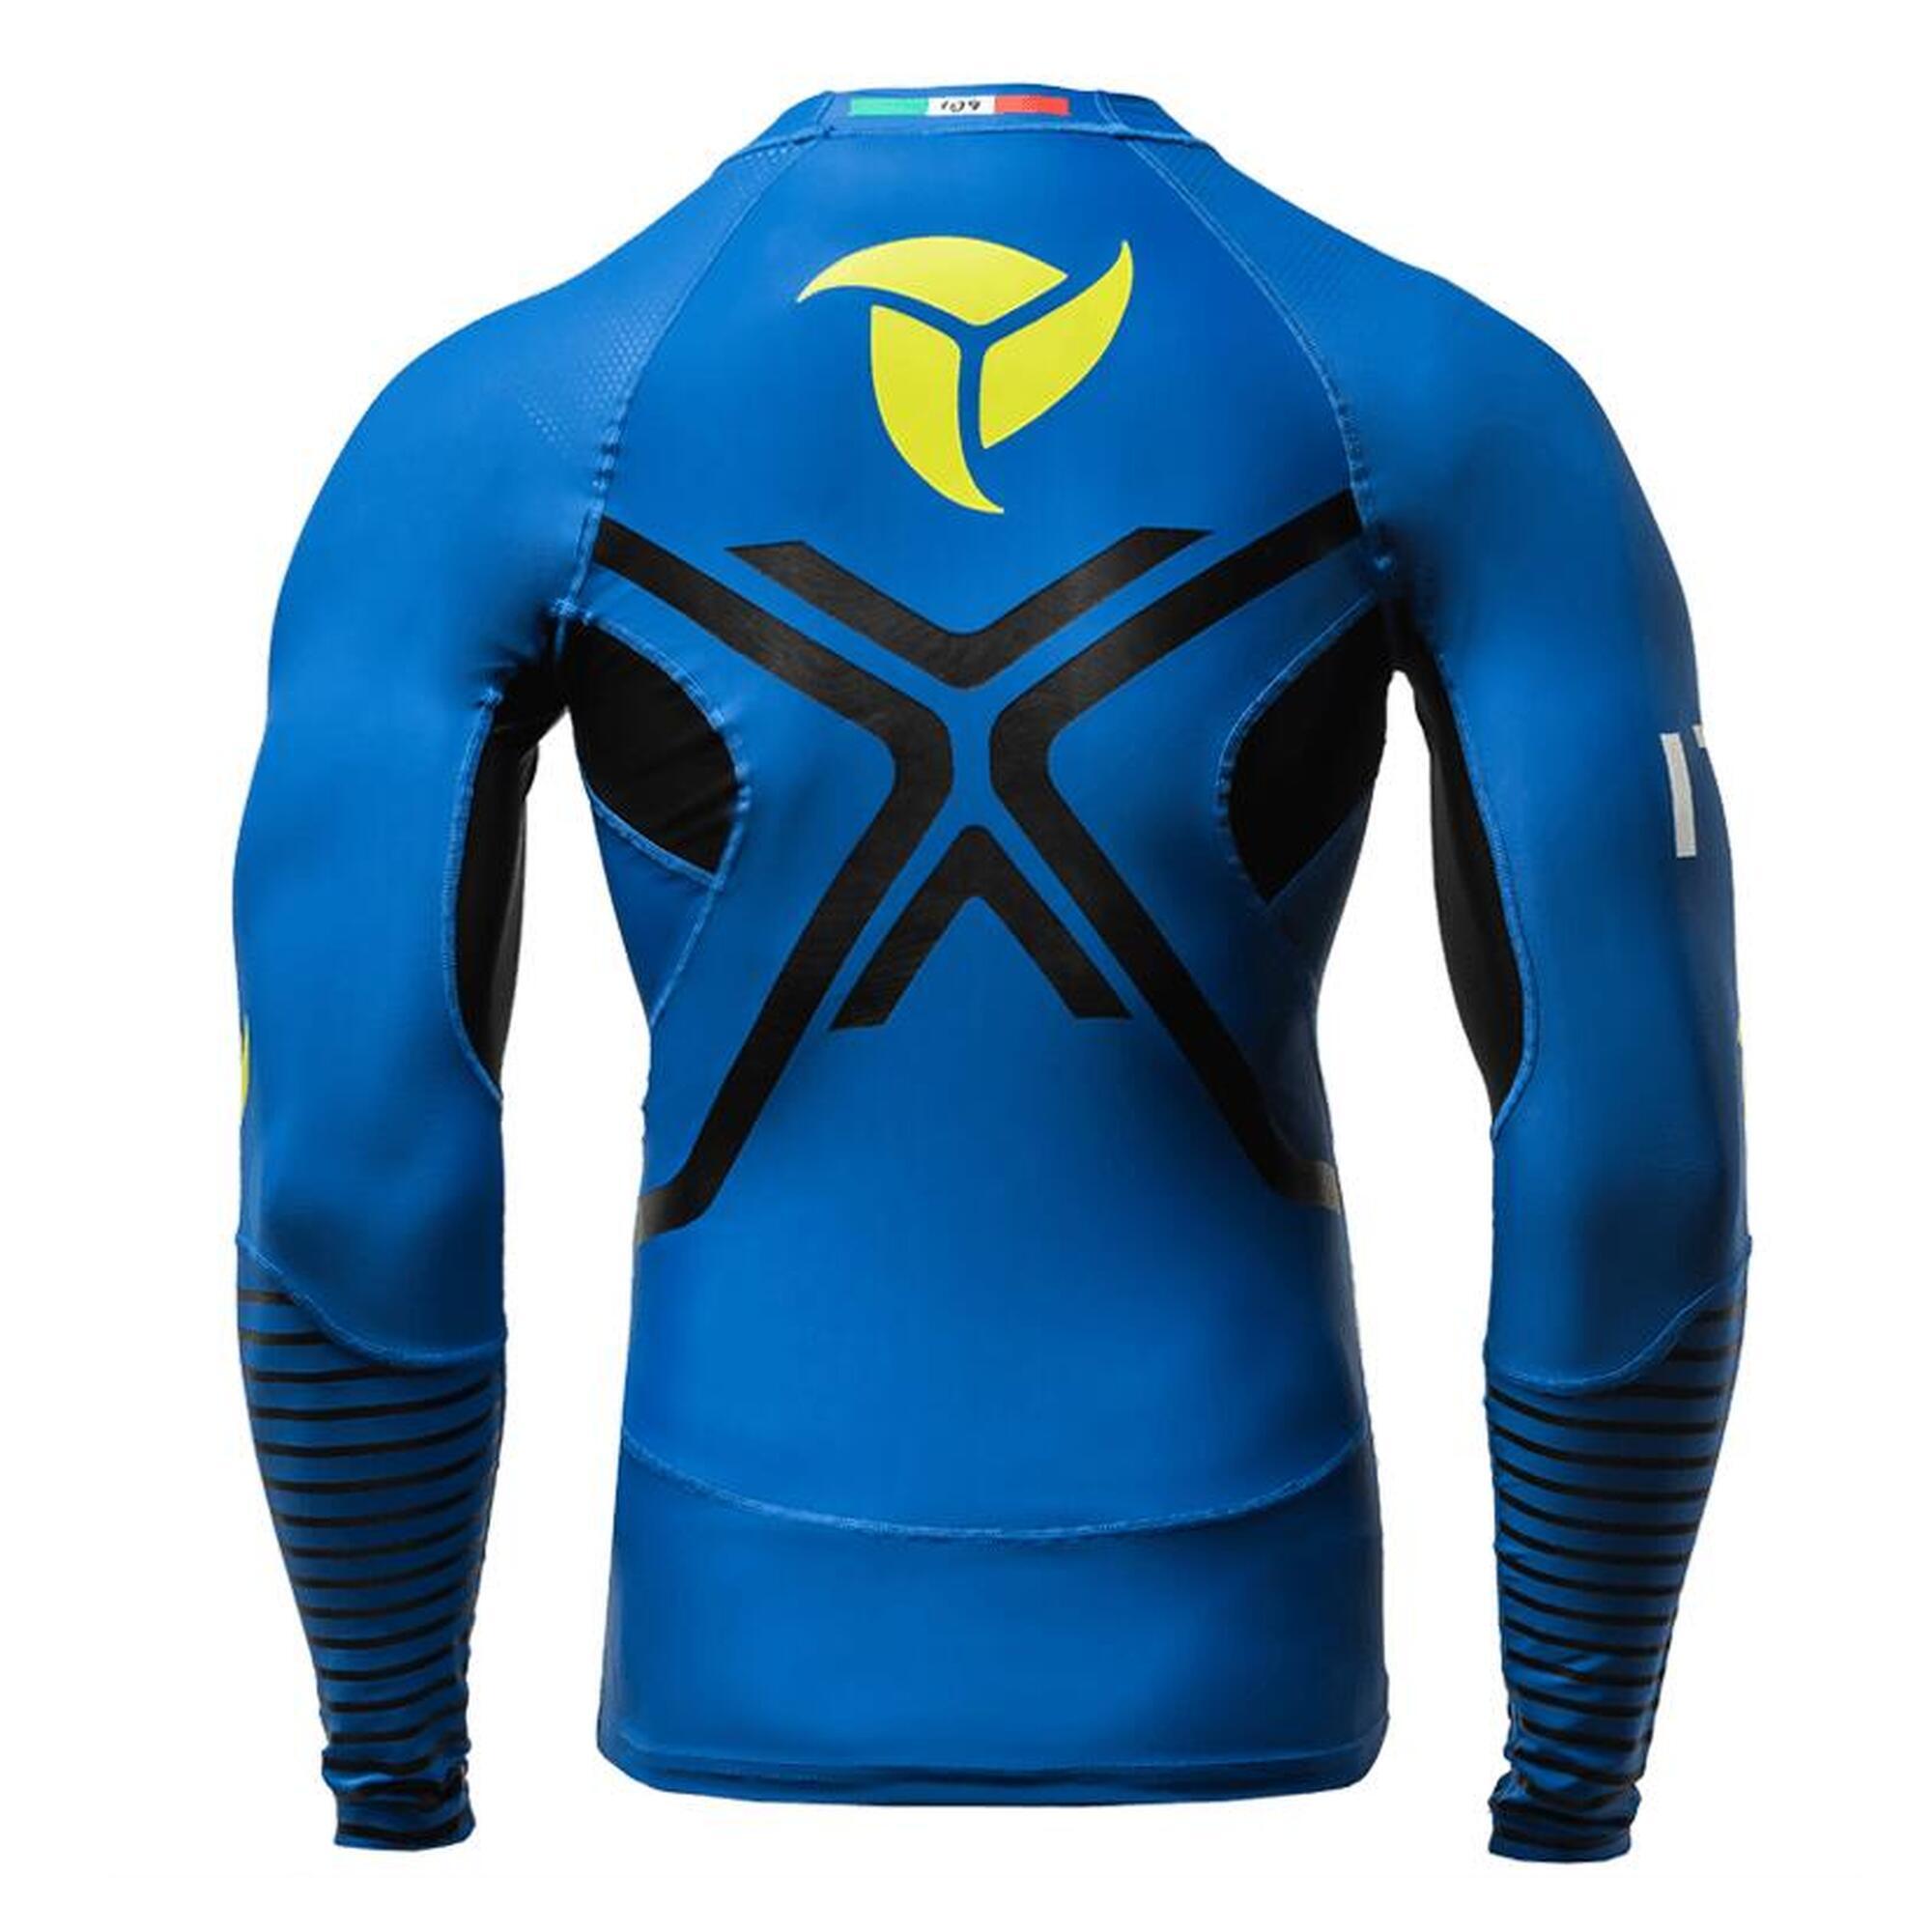 Camiseta Rashguard de Compresión anti-UV para piragüismo, kayak y SUP - Azul ITA